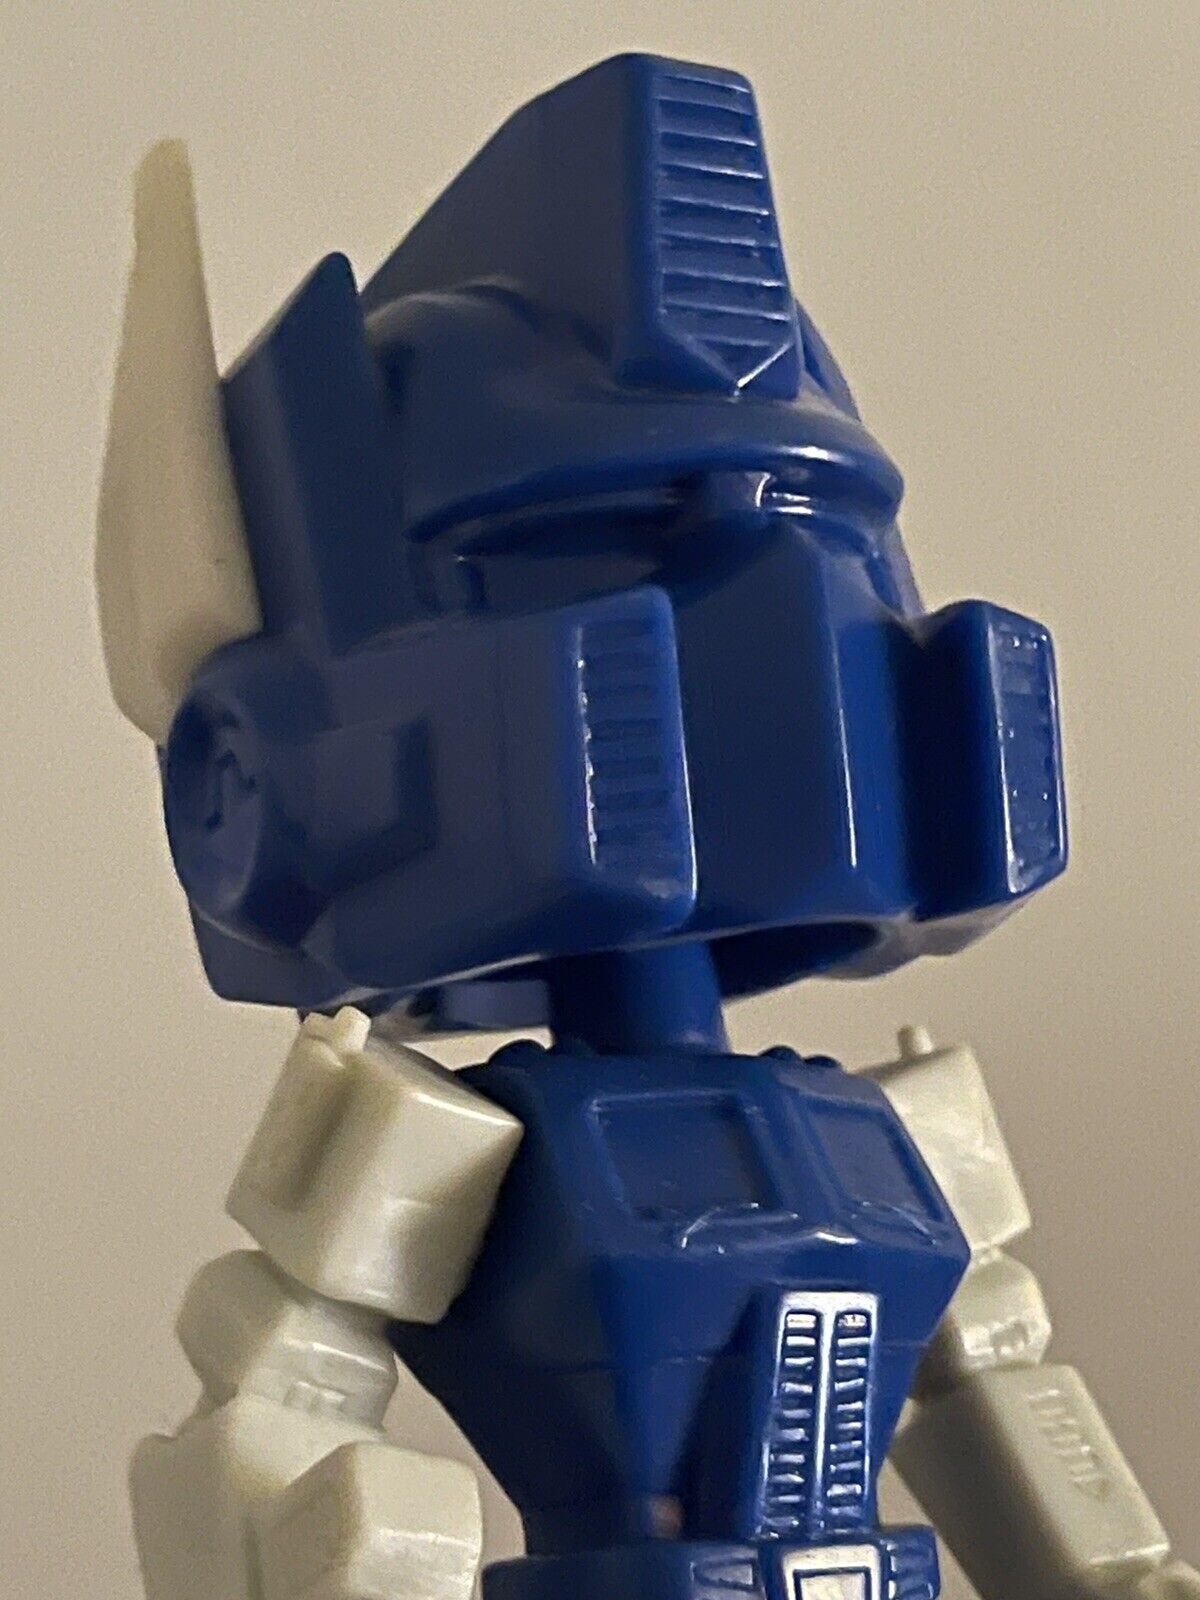 Transformers Wacky Wobbler G1 Optimus Prime Funko Figure RARE for sale online